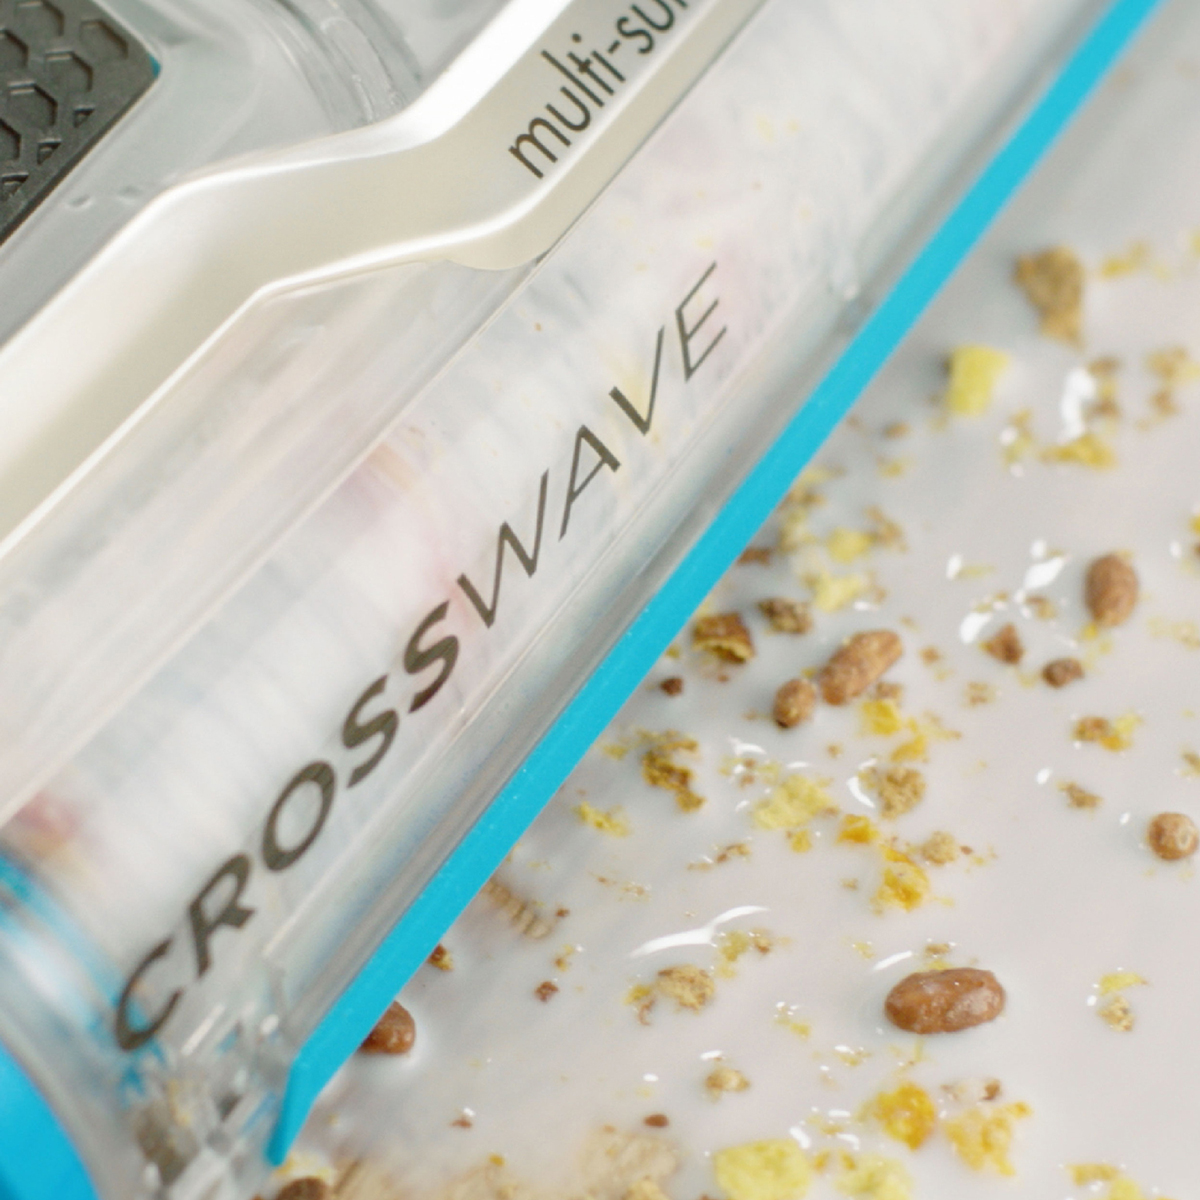 BISSELL® Crosswave® 3 in 1 เครื่องดูดฝุ่นทำความสะอาดพื้น